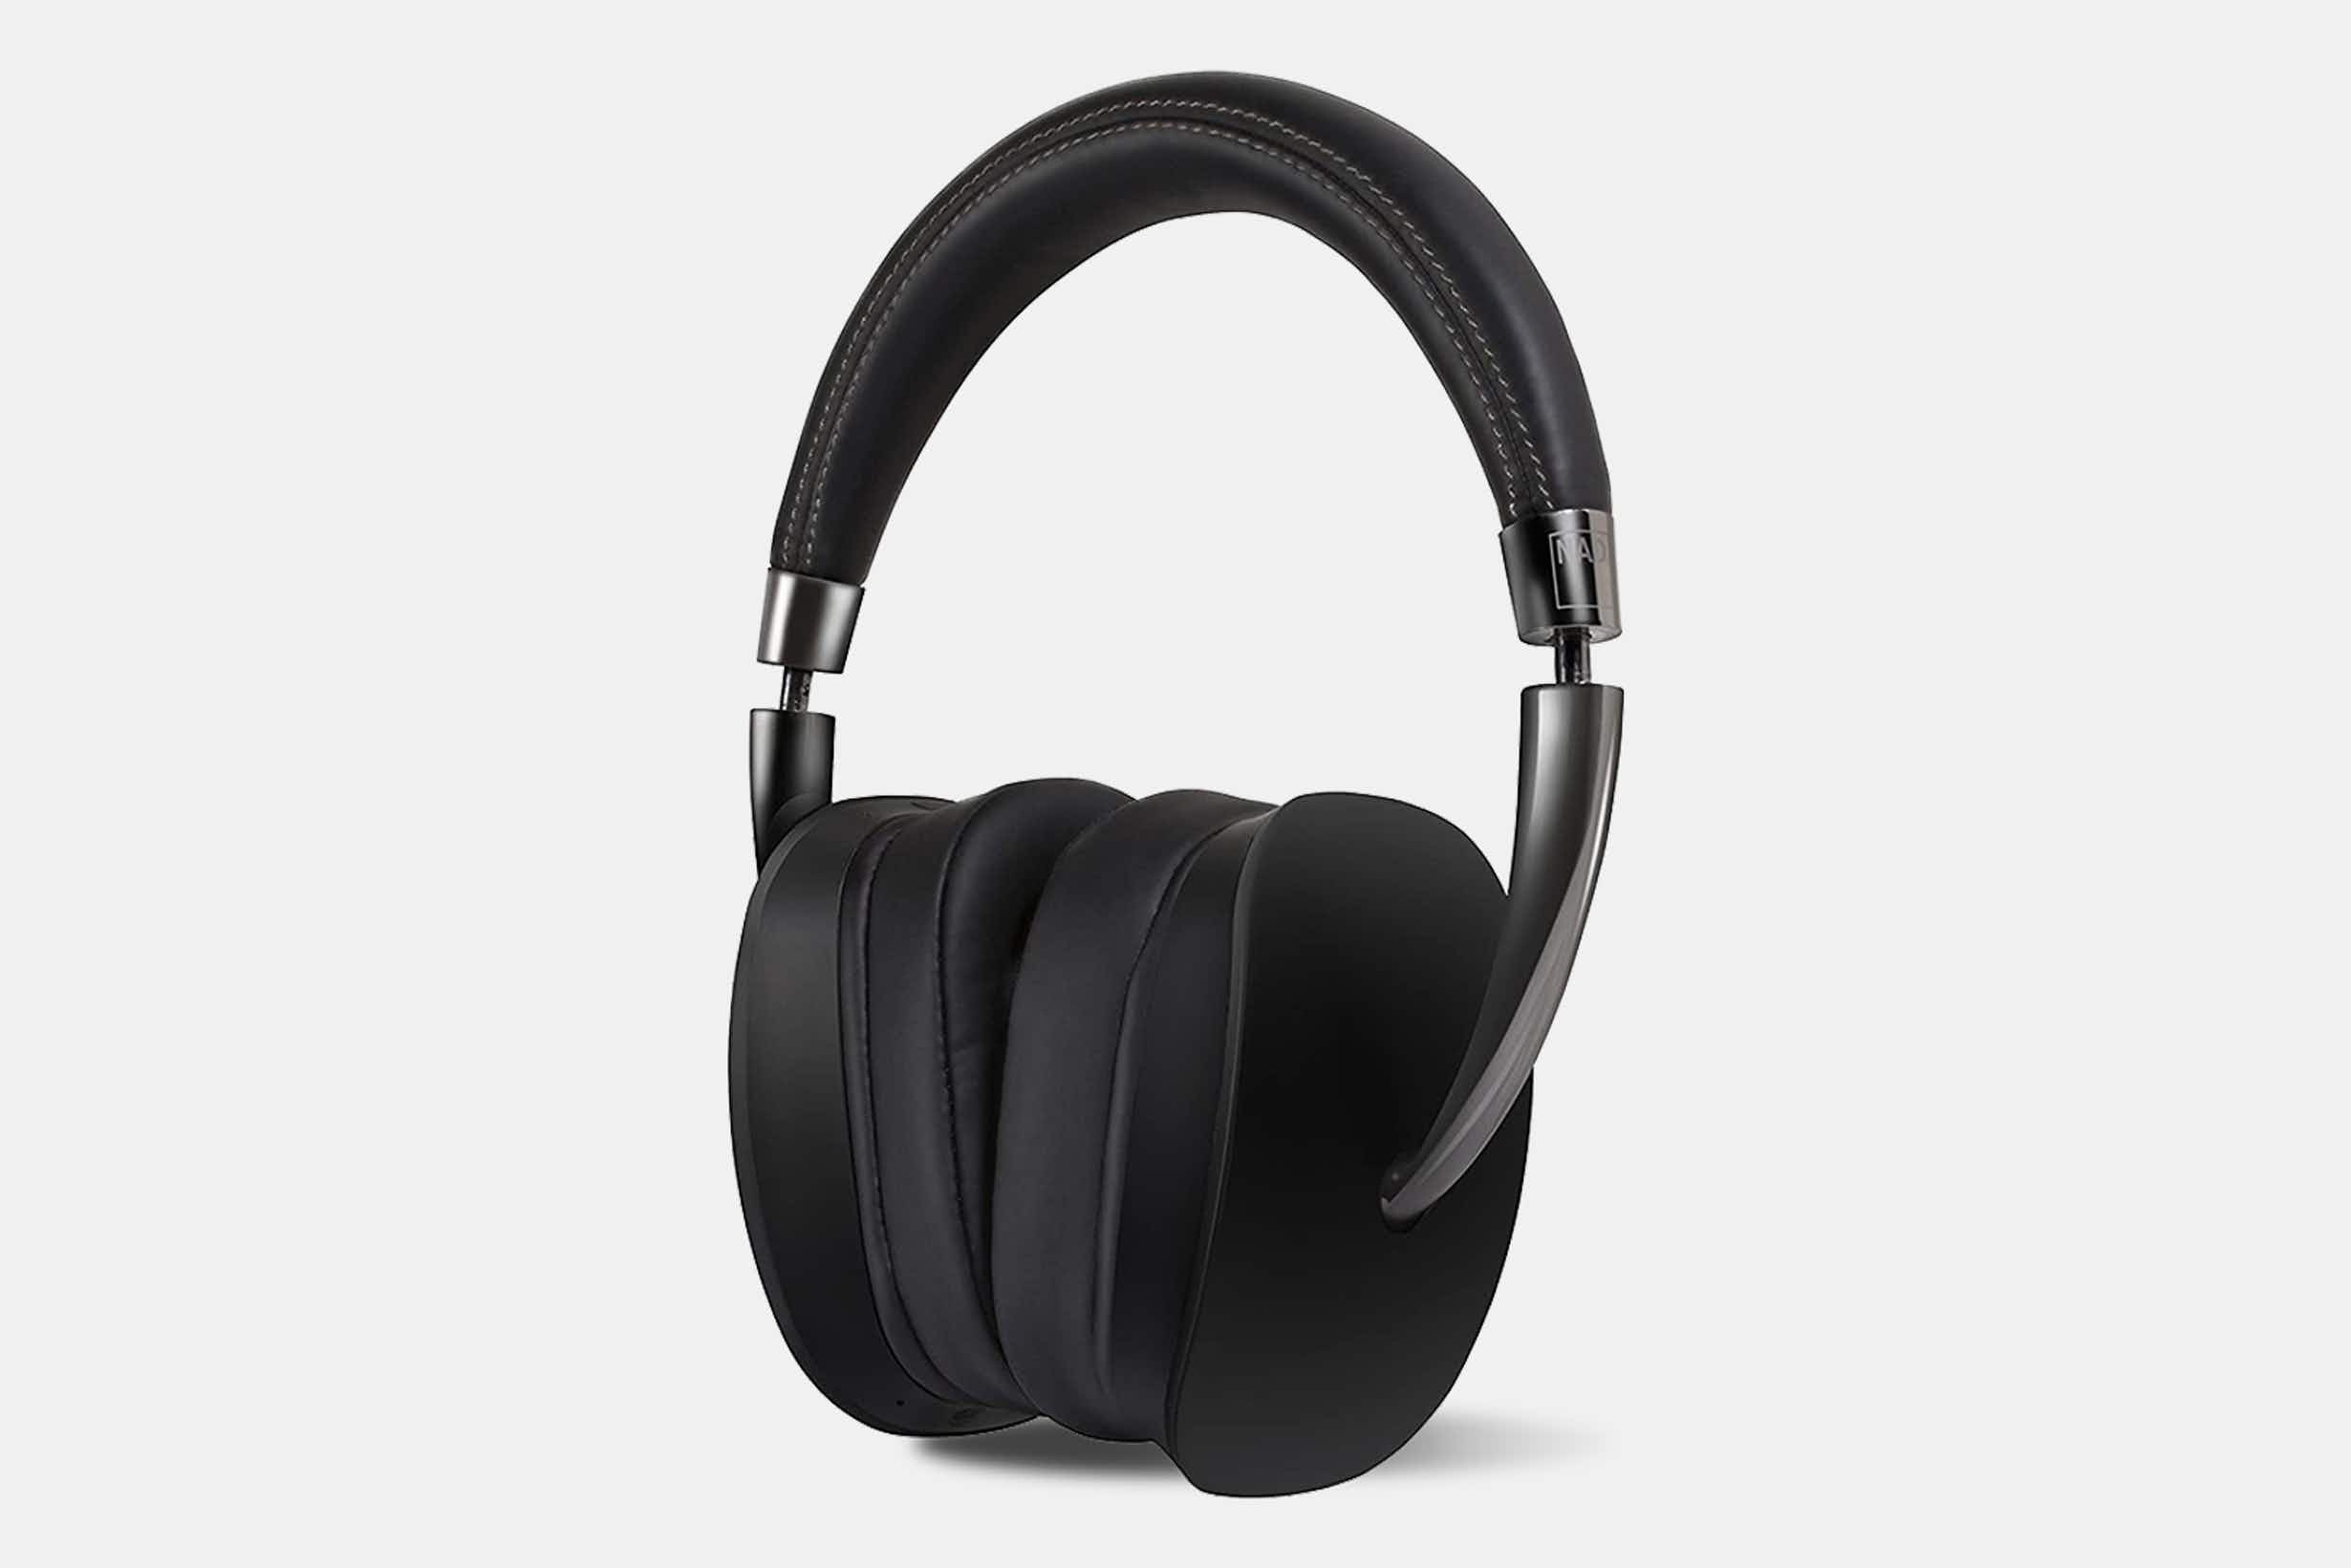 Nad hp70 wireless headphones $149.99